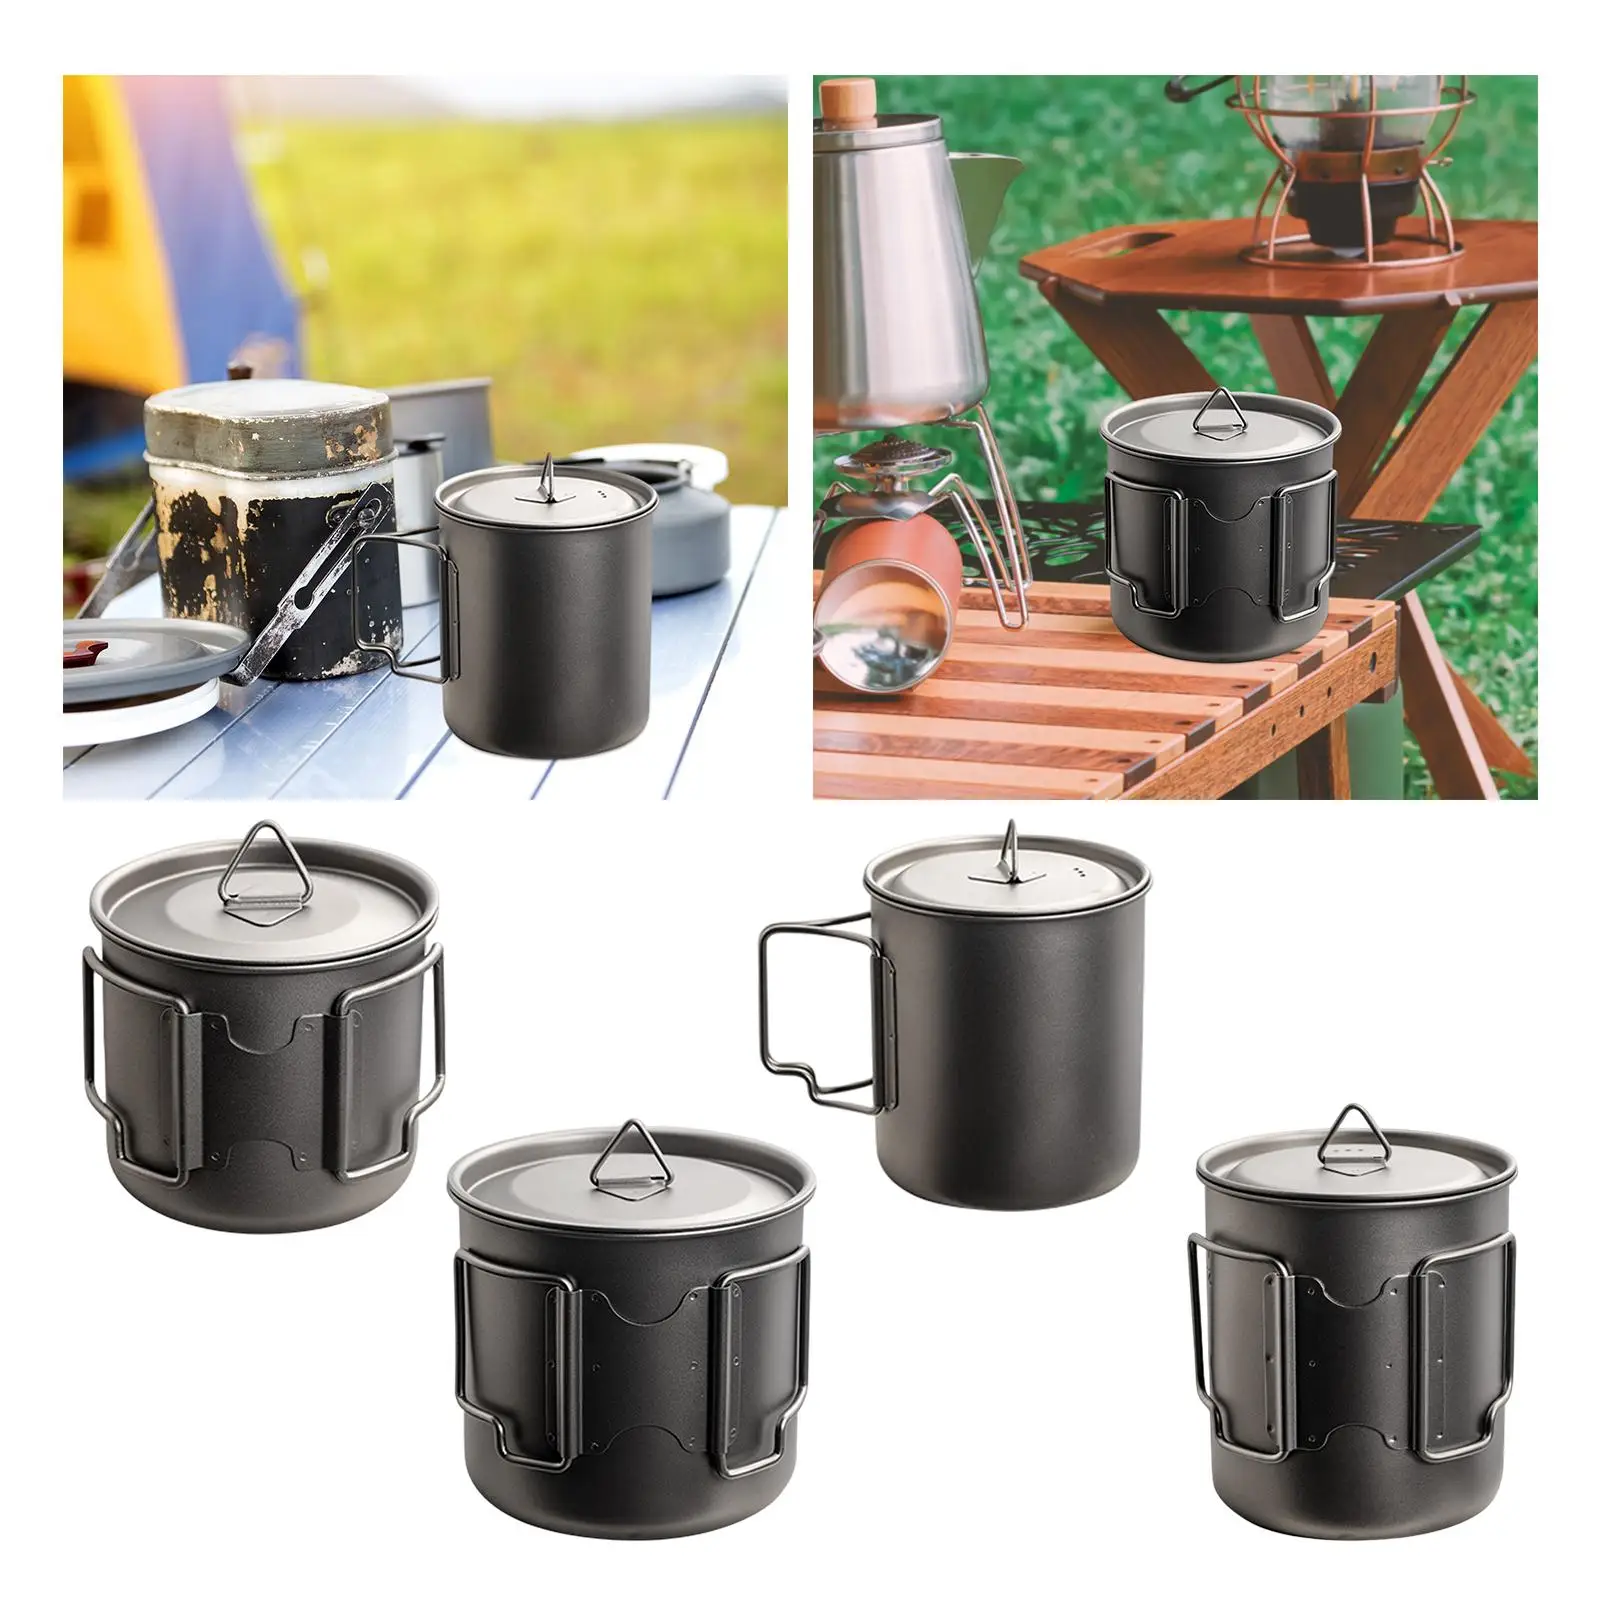 Titanium Pot Backpacking, Titanium Cup Titanium Tea Cup Camping Coffee Mug for Picnic